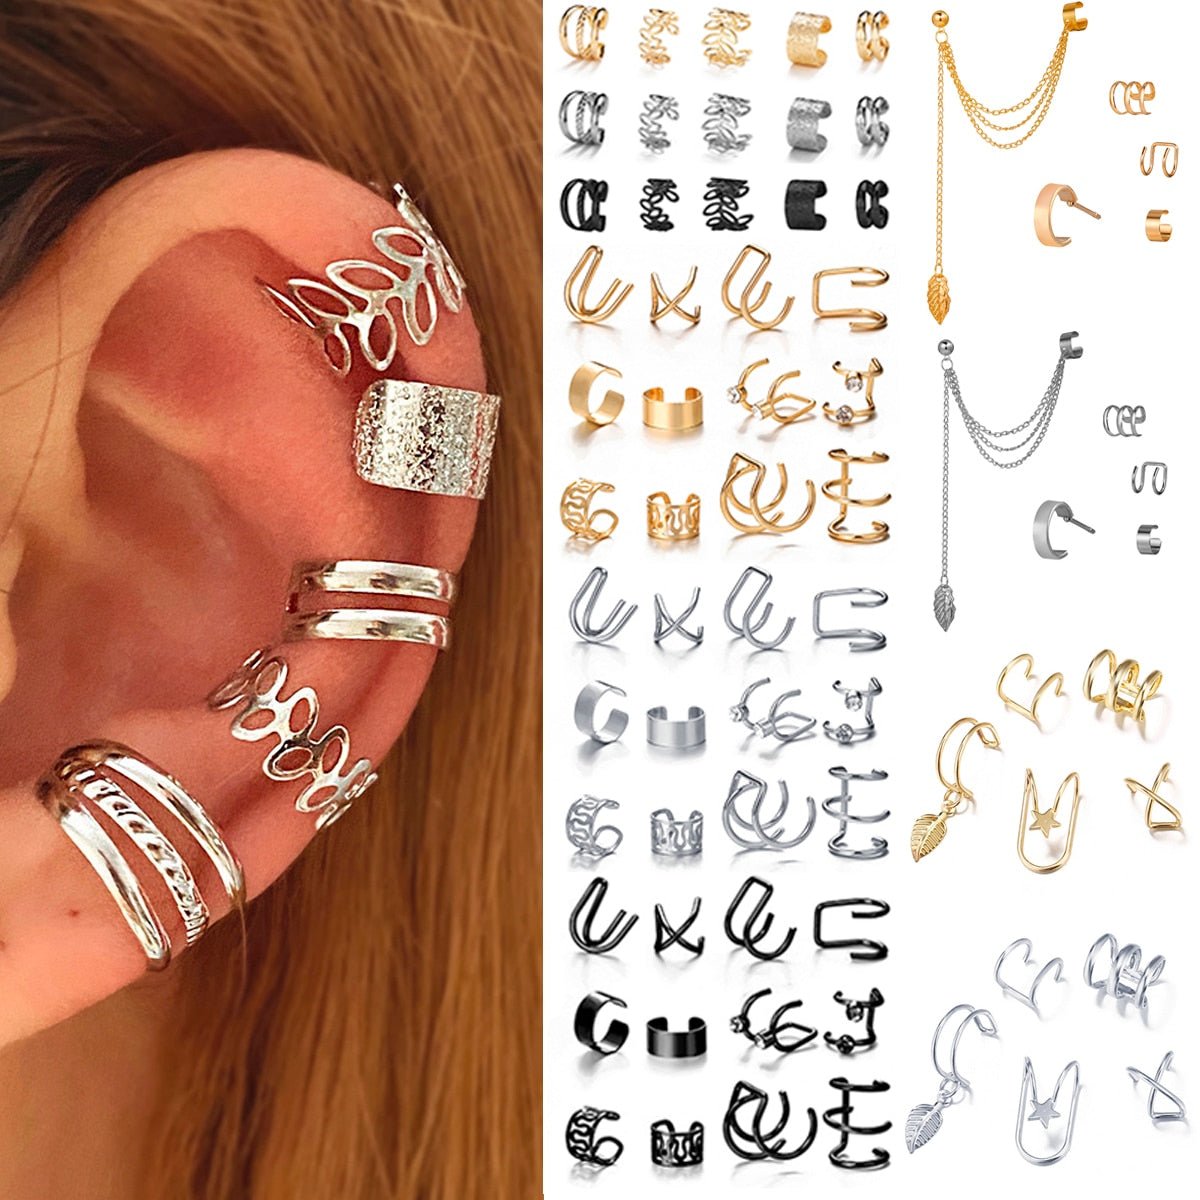 Creative Simple Ear Cuff Clip Earring Sets - Sweet Sentimental GiftsCreative Simple Ear Cuff Clip Earring SetsEarringsLatsSweet Sentimental Gifts3256803550559637-66954Creative Simple Ear Cuff Clip Earring SetsGold Cuff054499264320